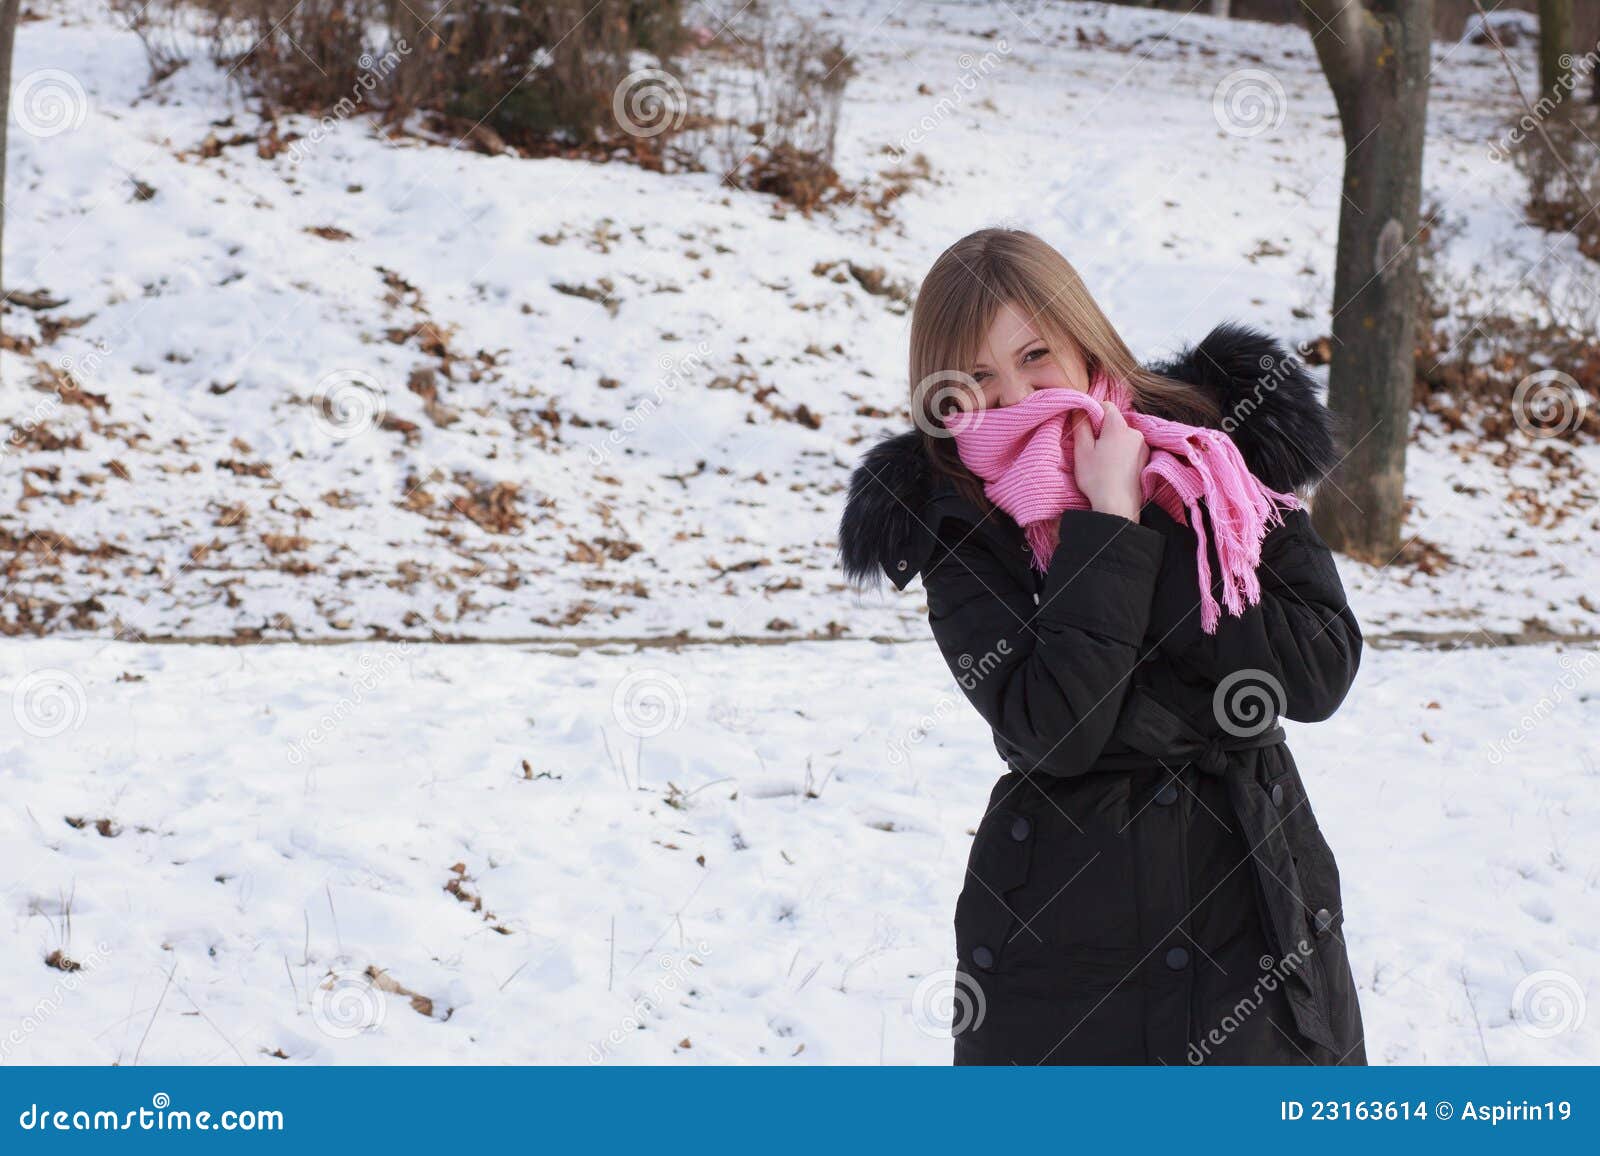 Winter Girl stock photo. Image of people, cold, season - 23163614